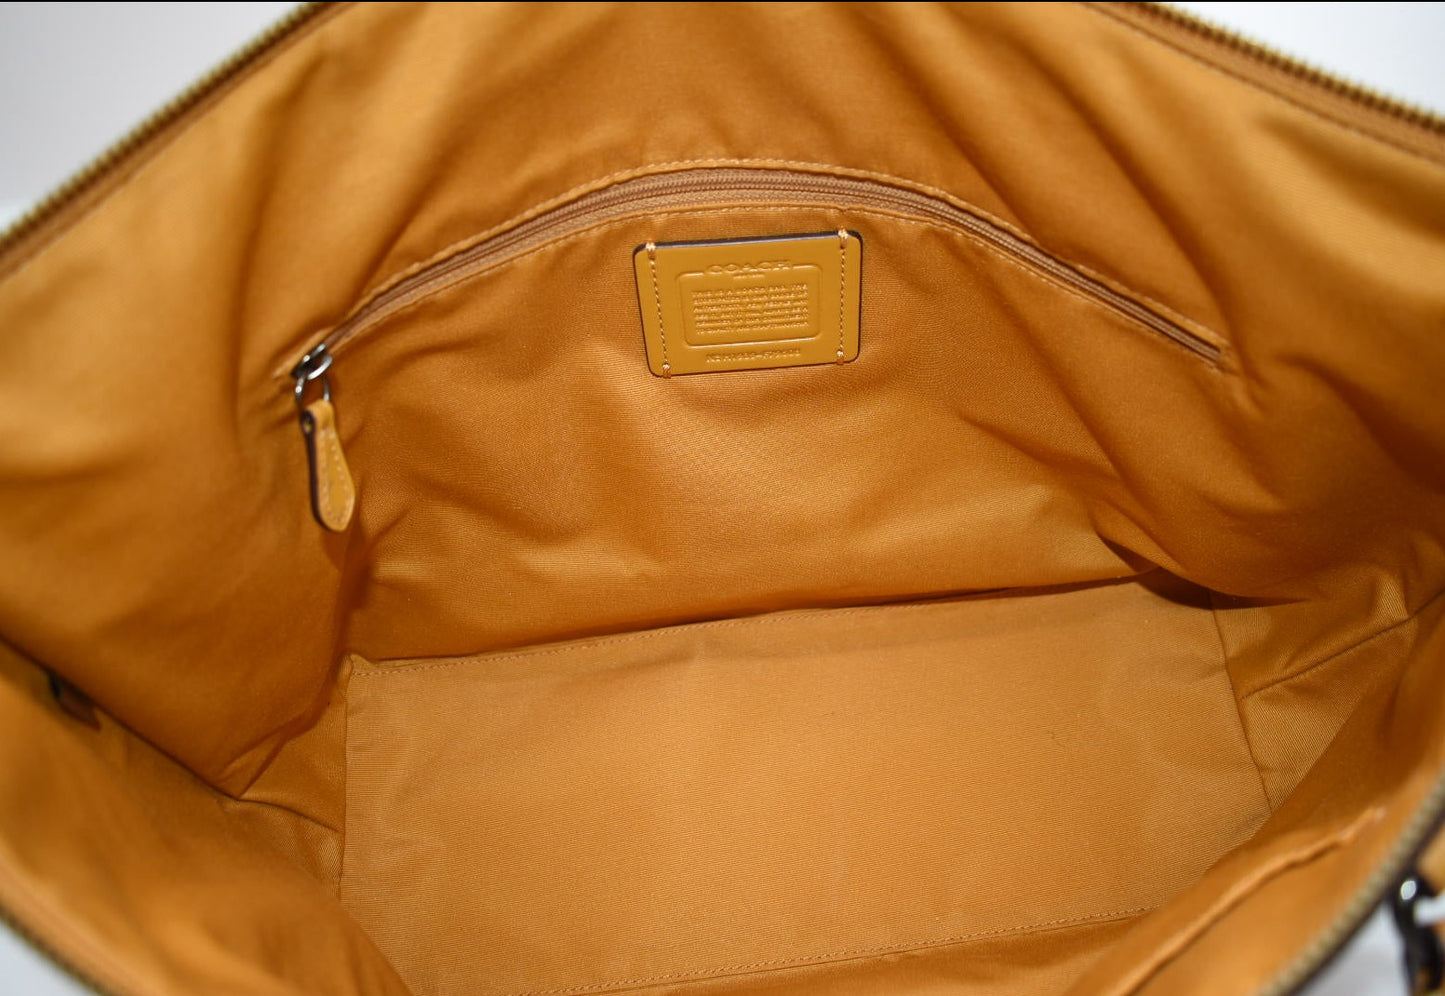 Coach Crossgrain Leather Gallery Tote Bag in Dark Yellow